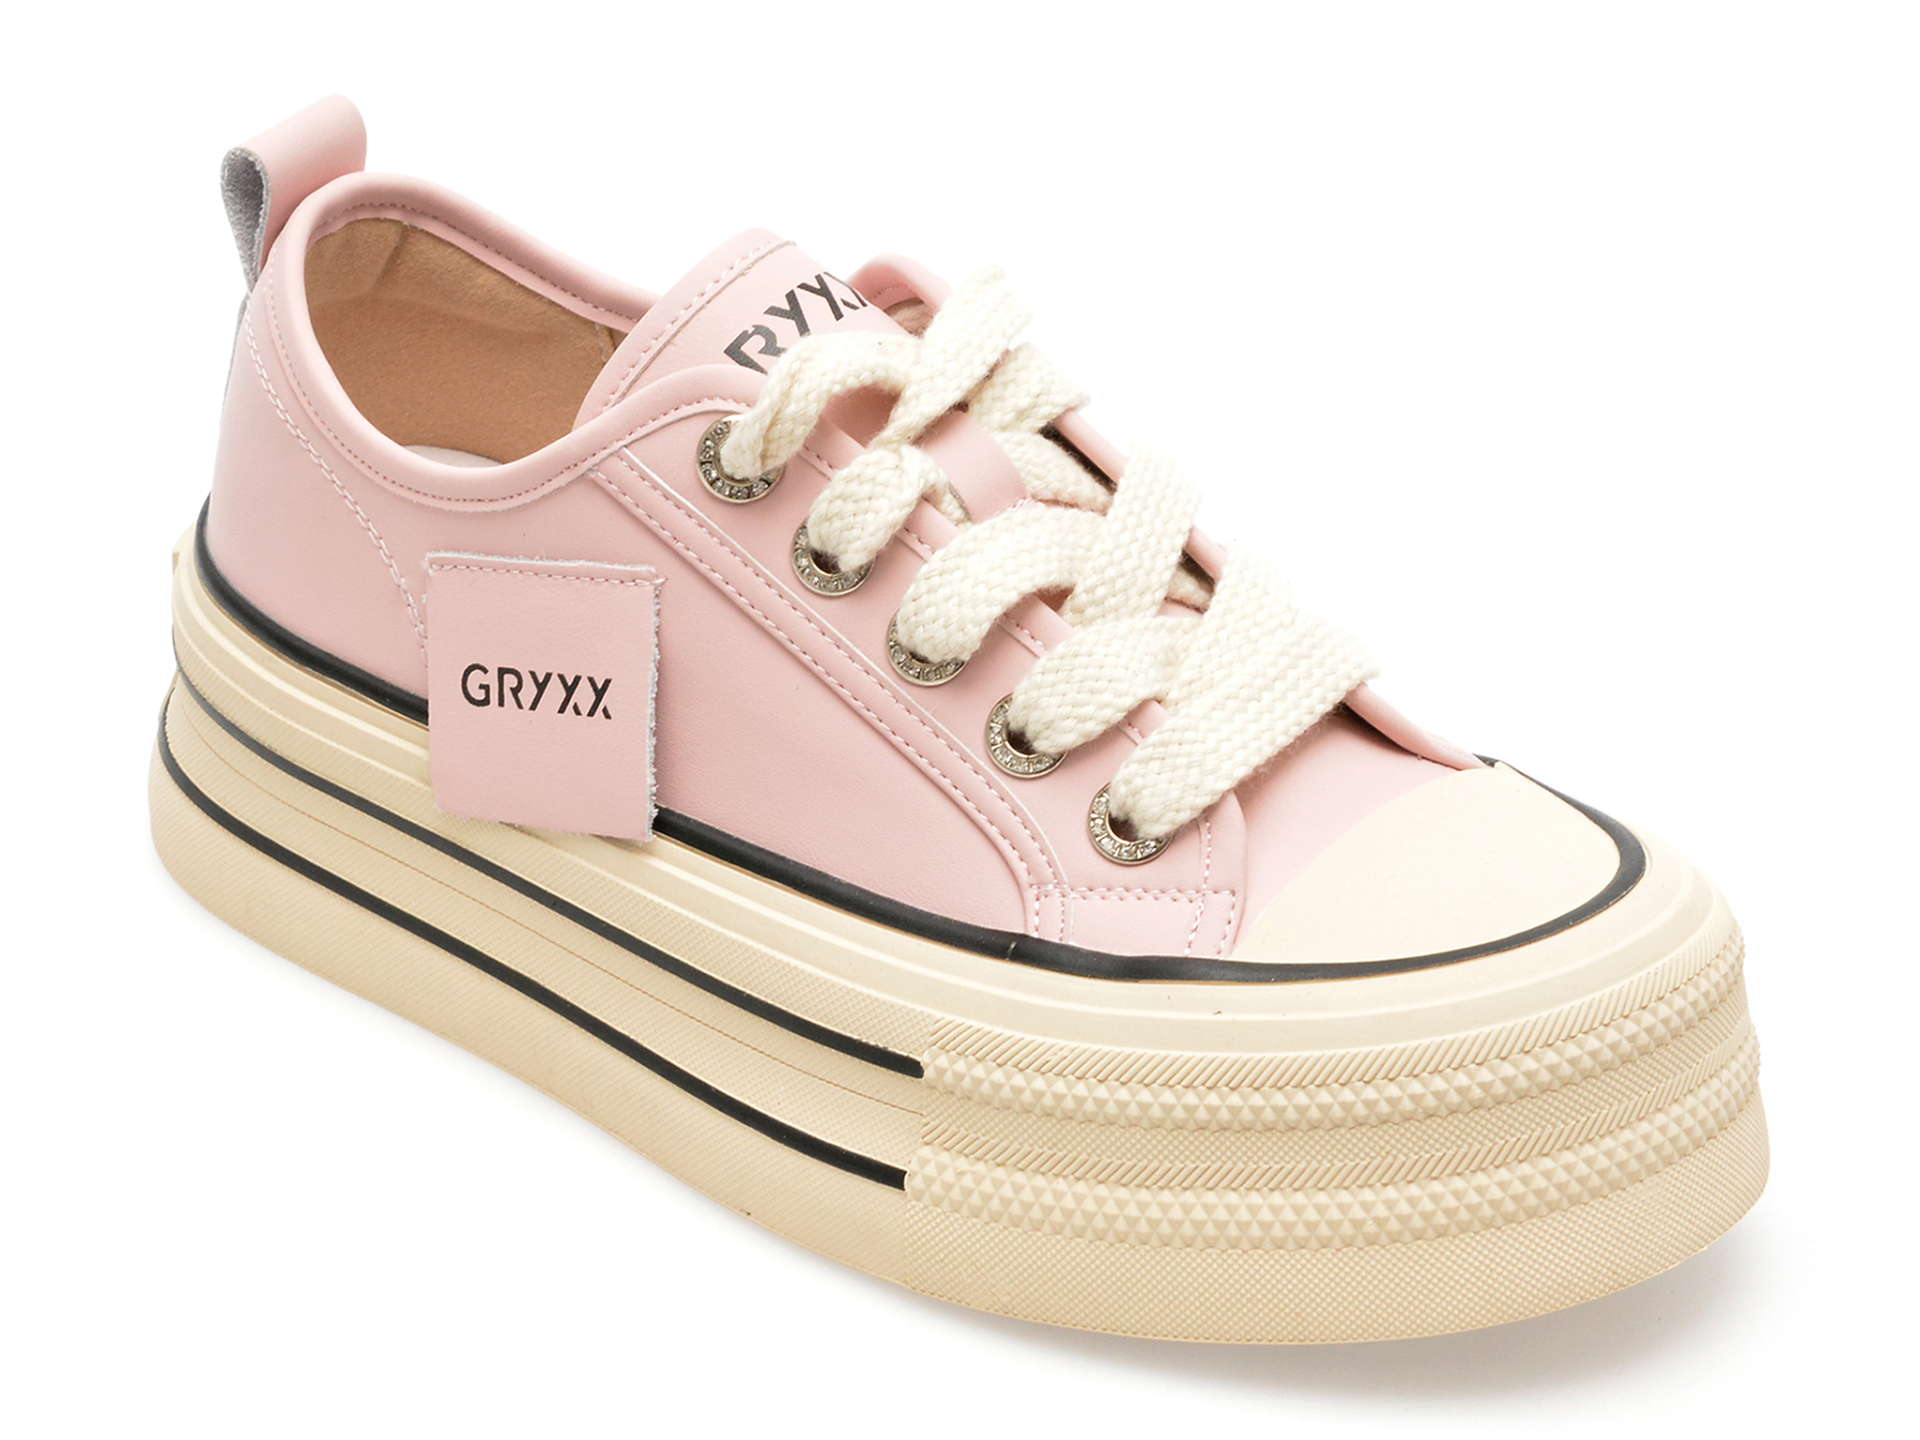 Pantofi GRYXX roz, 3013, din piele naturala